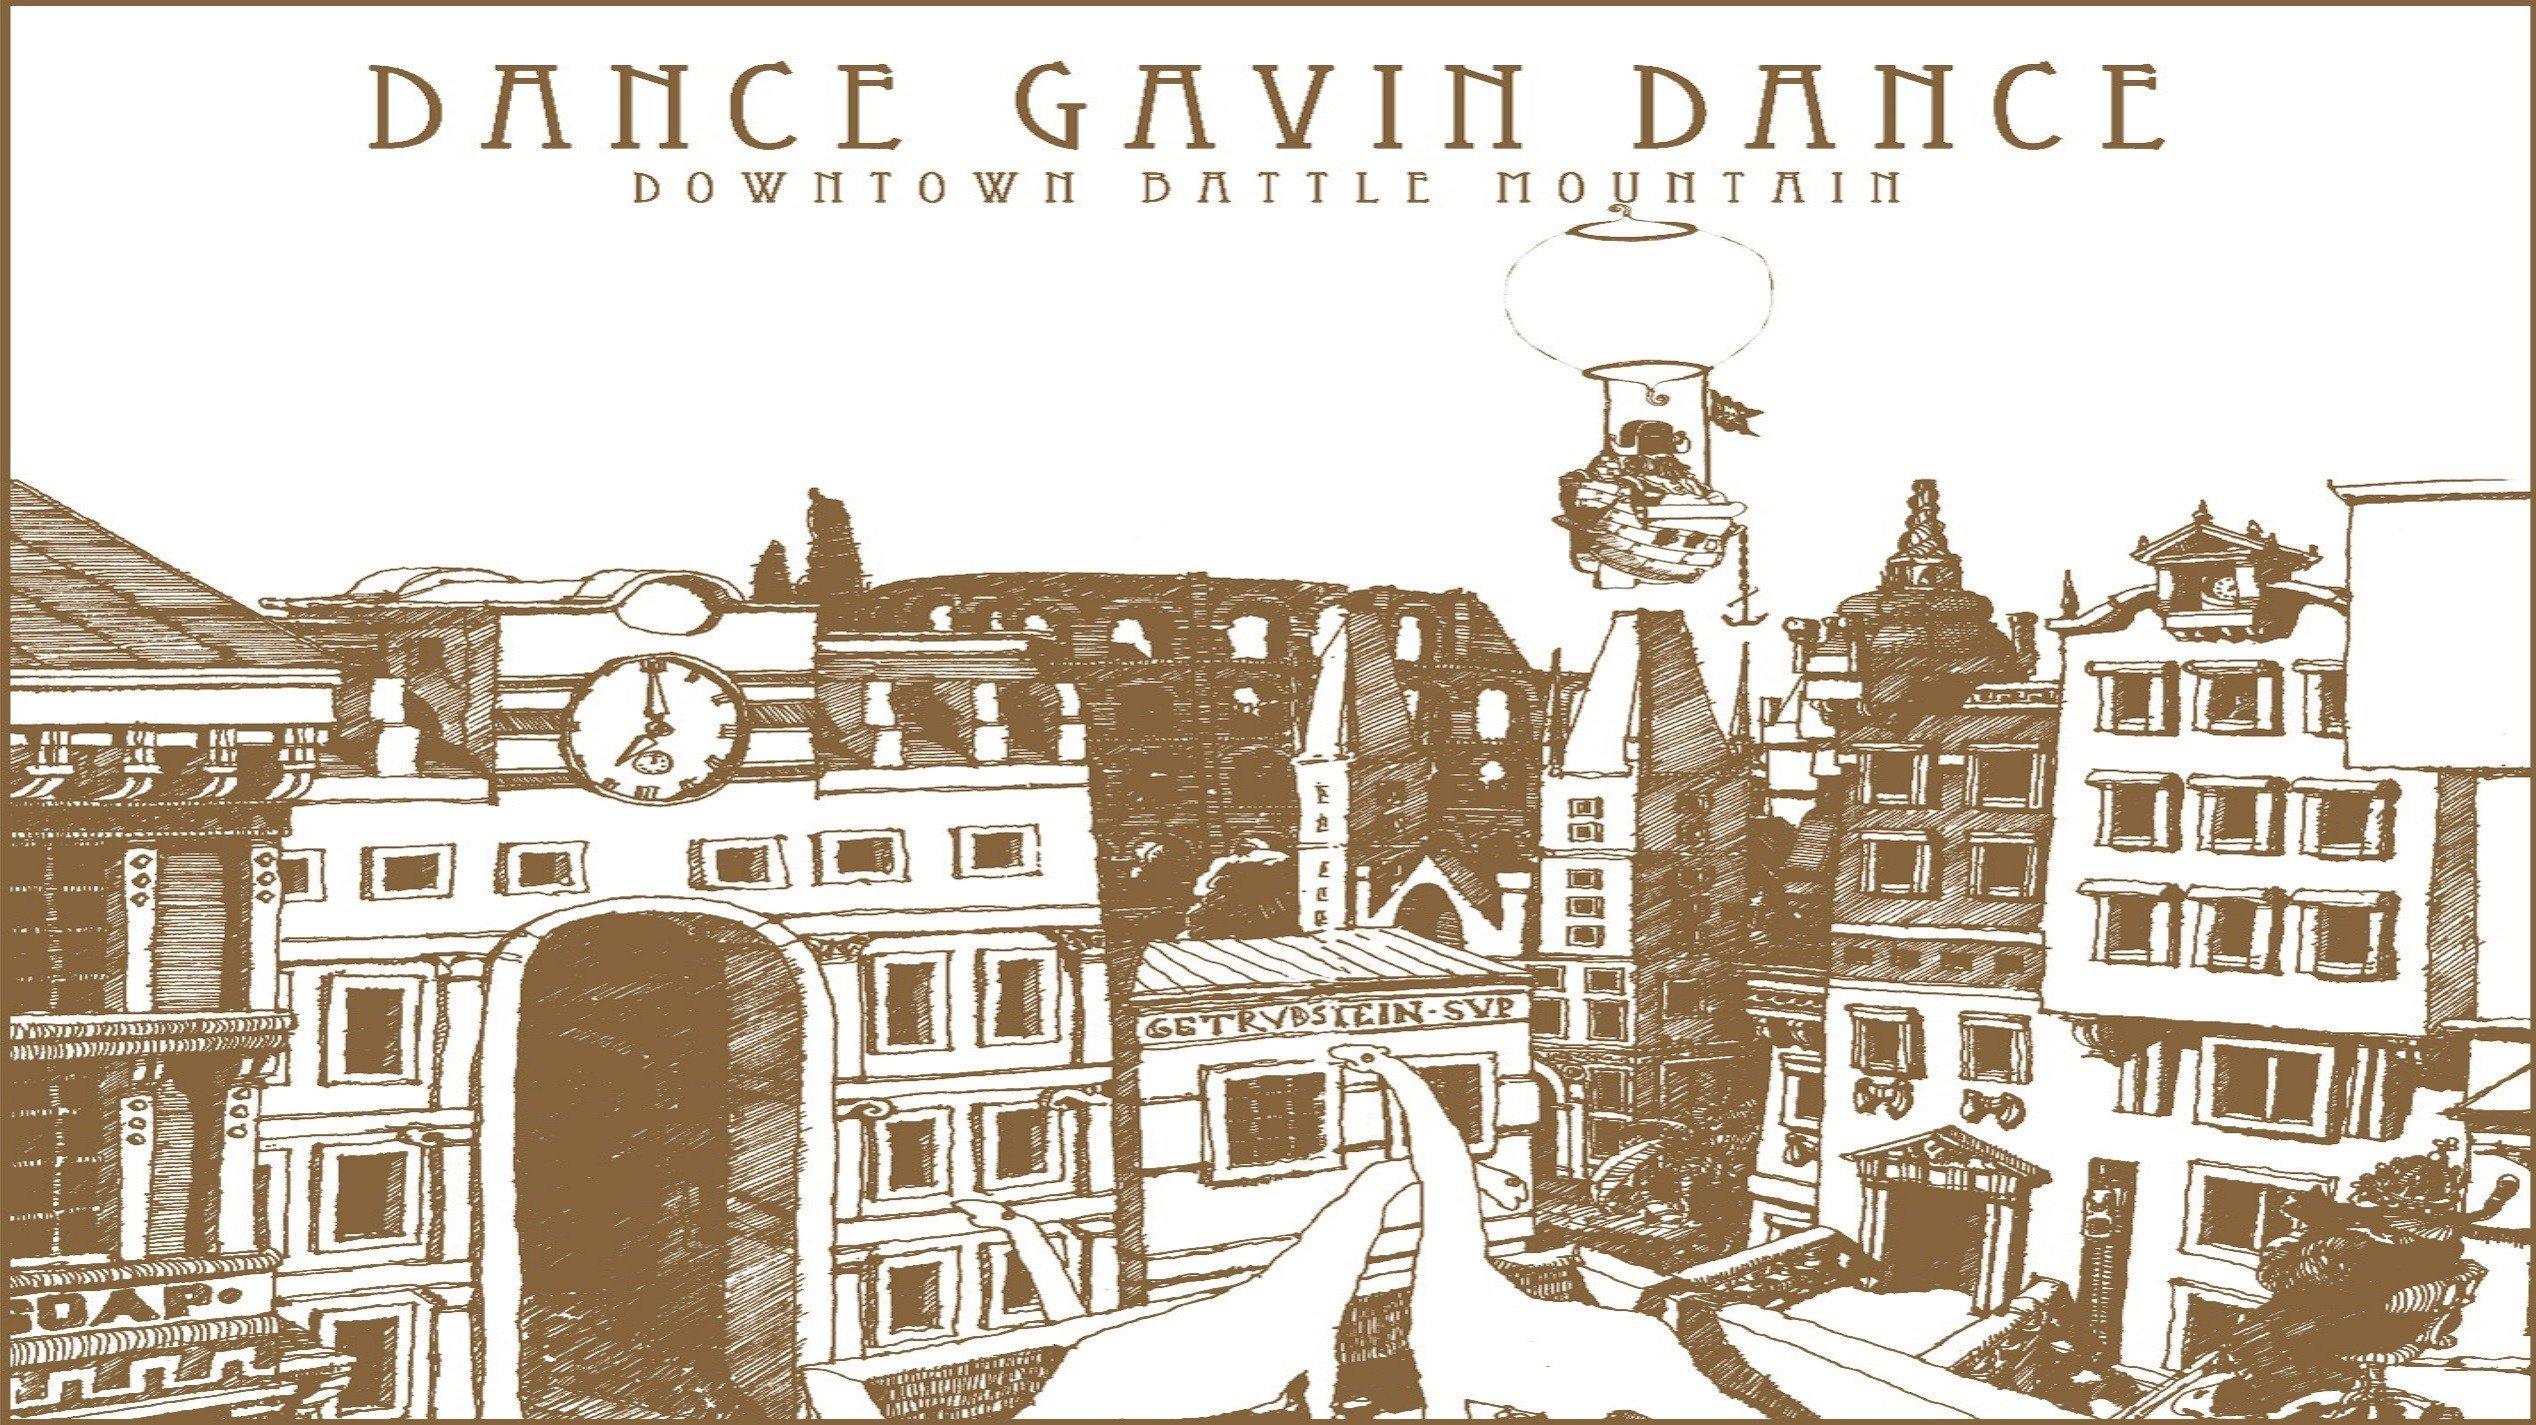 Wallpaper, 2536x1425 px, album covers, Dance Gavin Dance, music